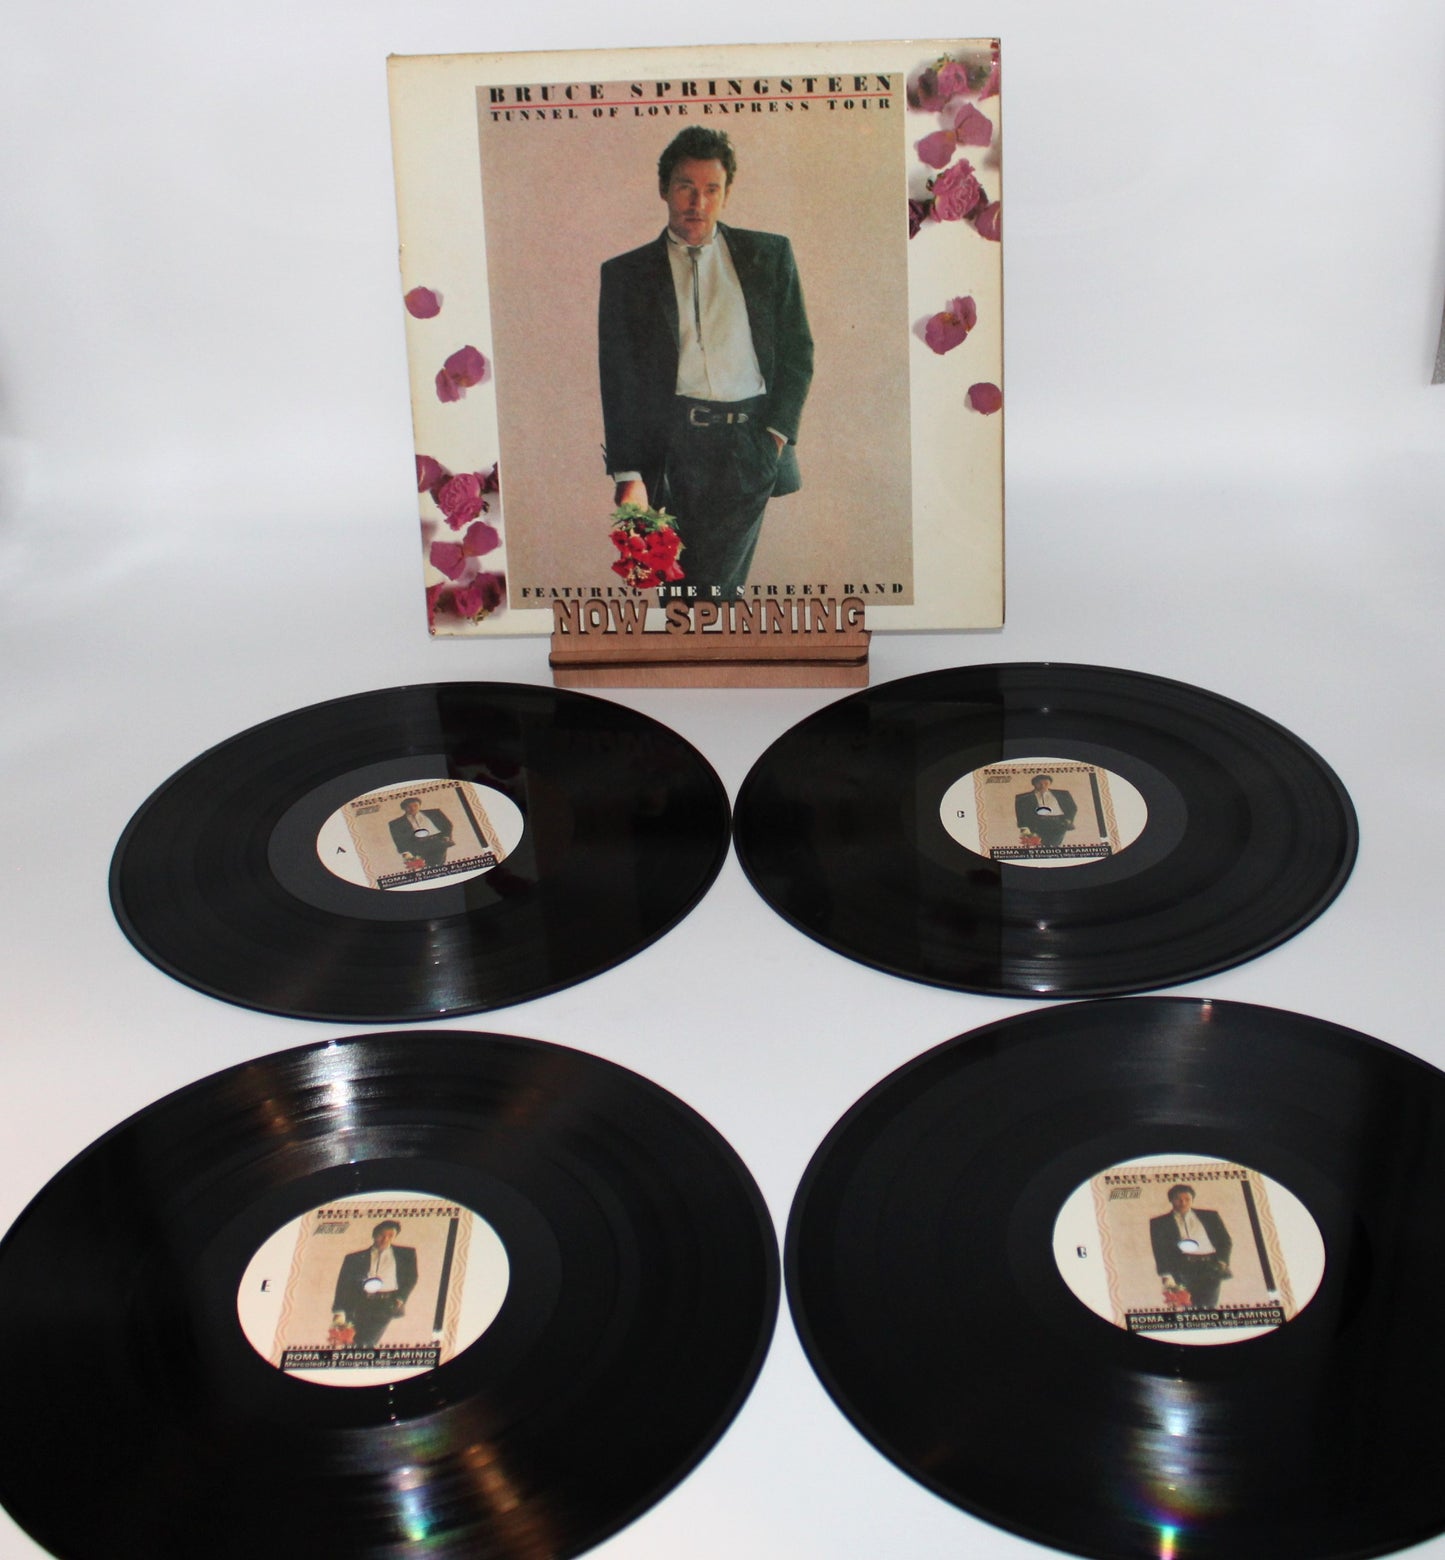 Bruce Springsteen Tunnel Of Love Express Tour - European Tour 1988 Vinyl 4 LPs - BLV